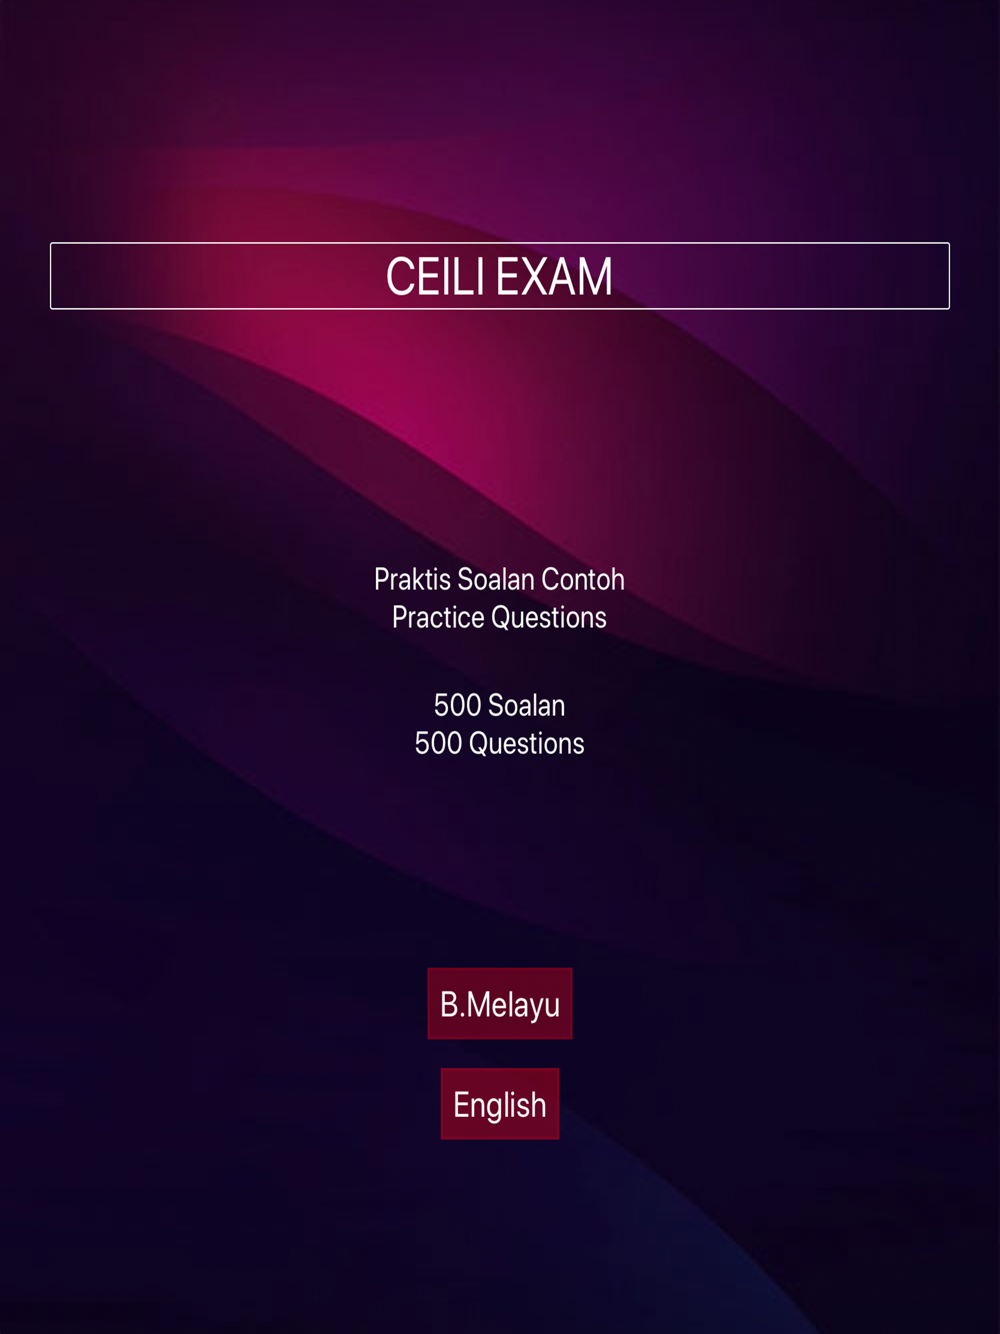 Ceili Exam Bmelayu English For Iphone Download Ceili Exam Bmelayu English For Ios Apktume Com